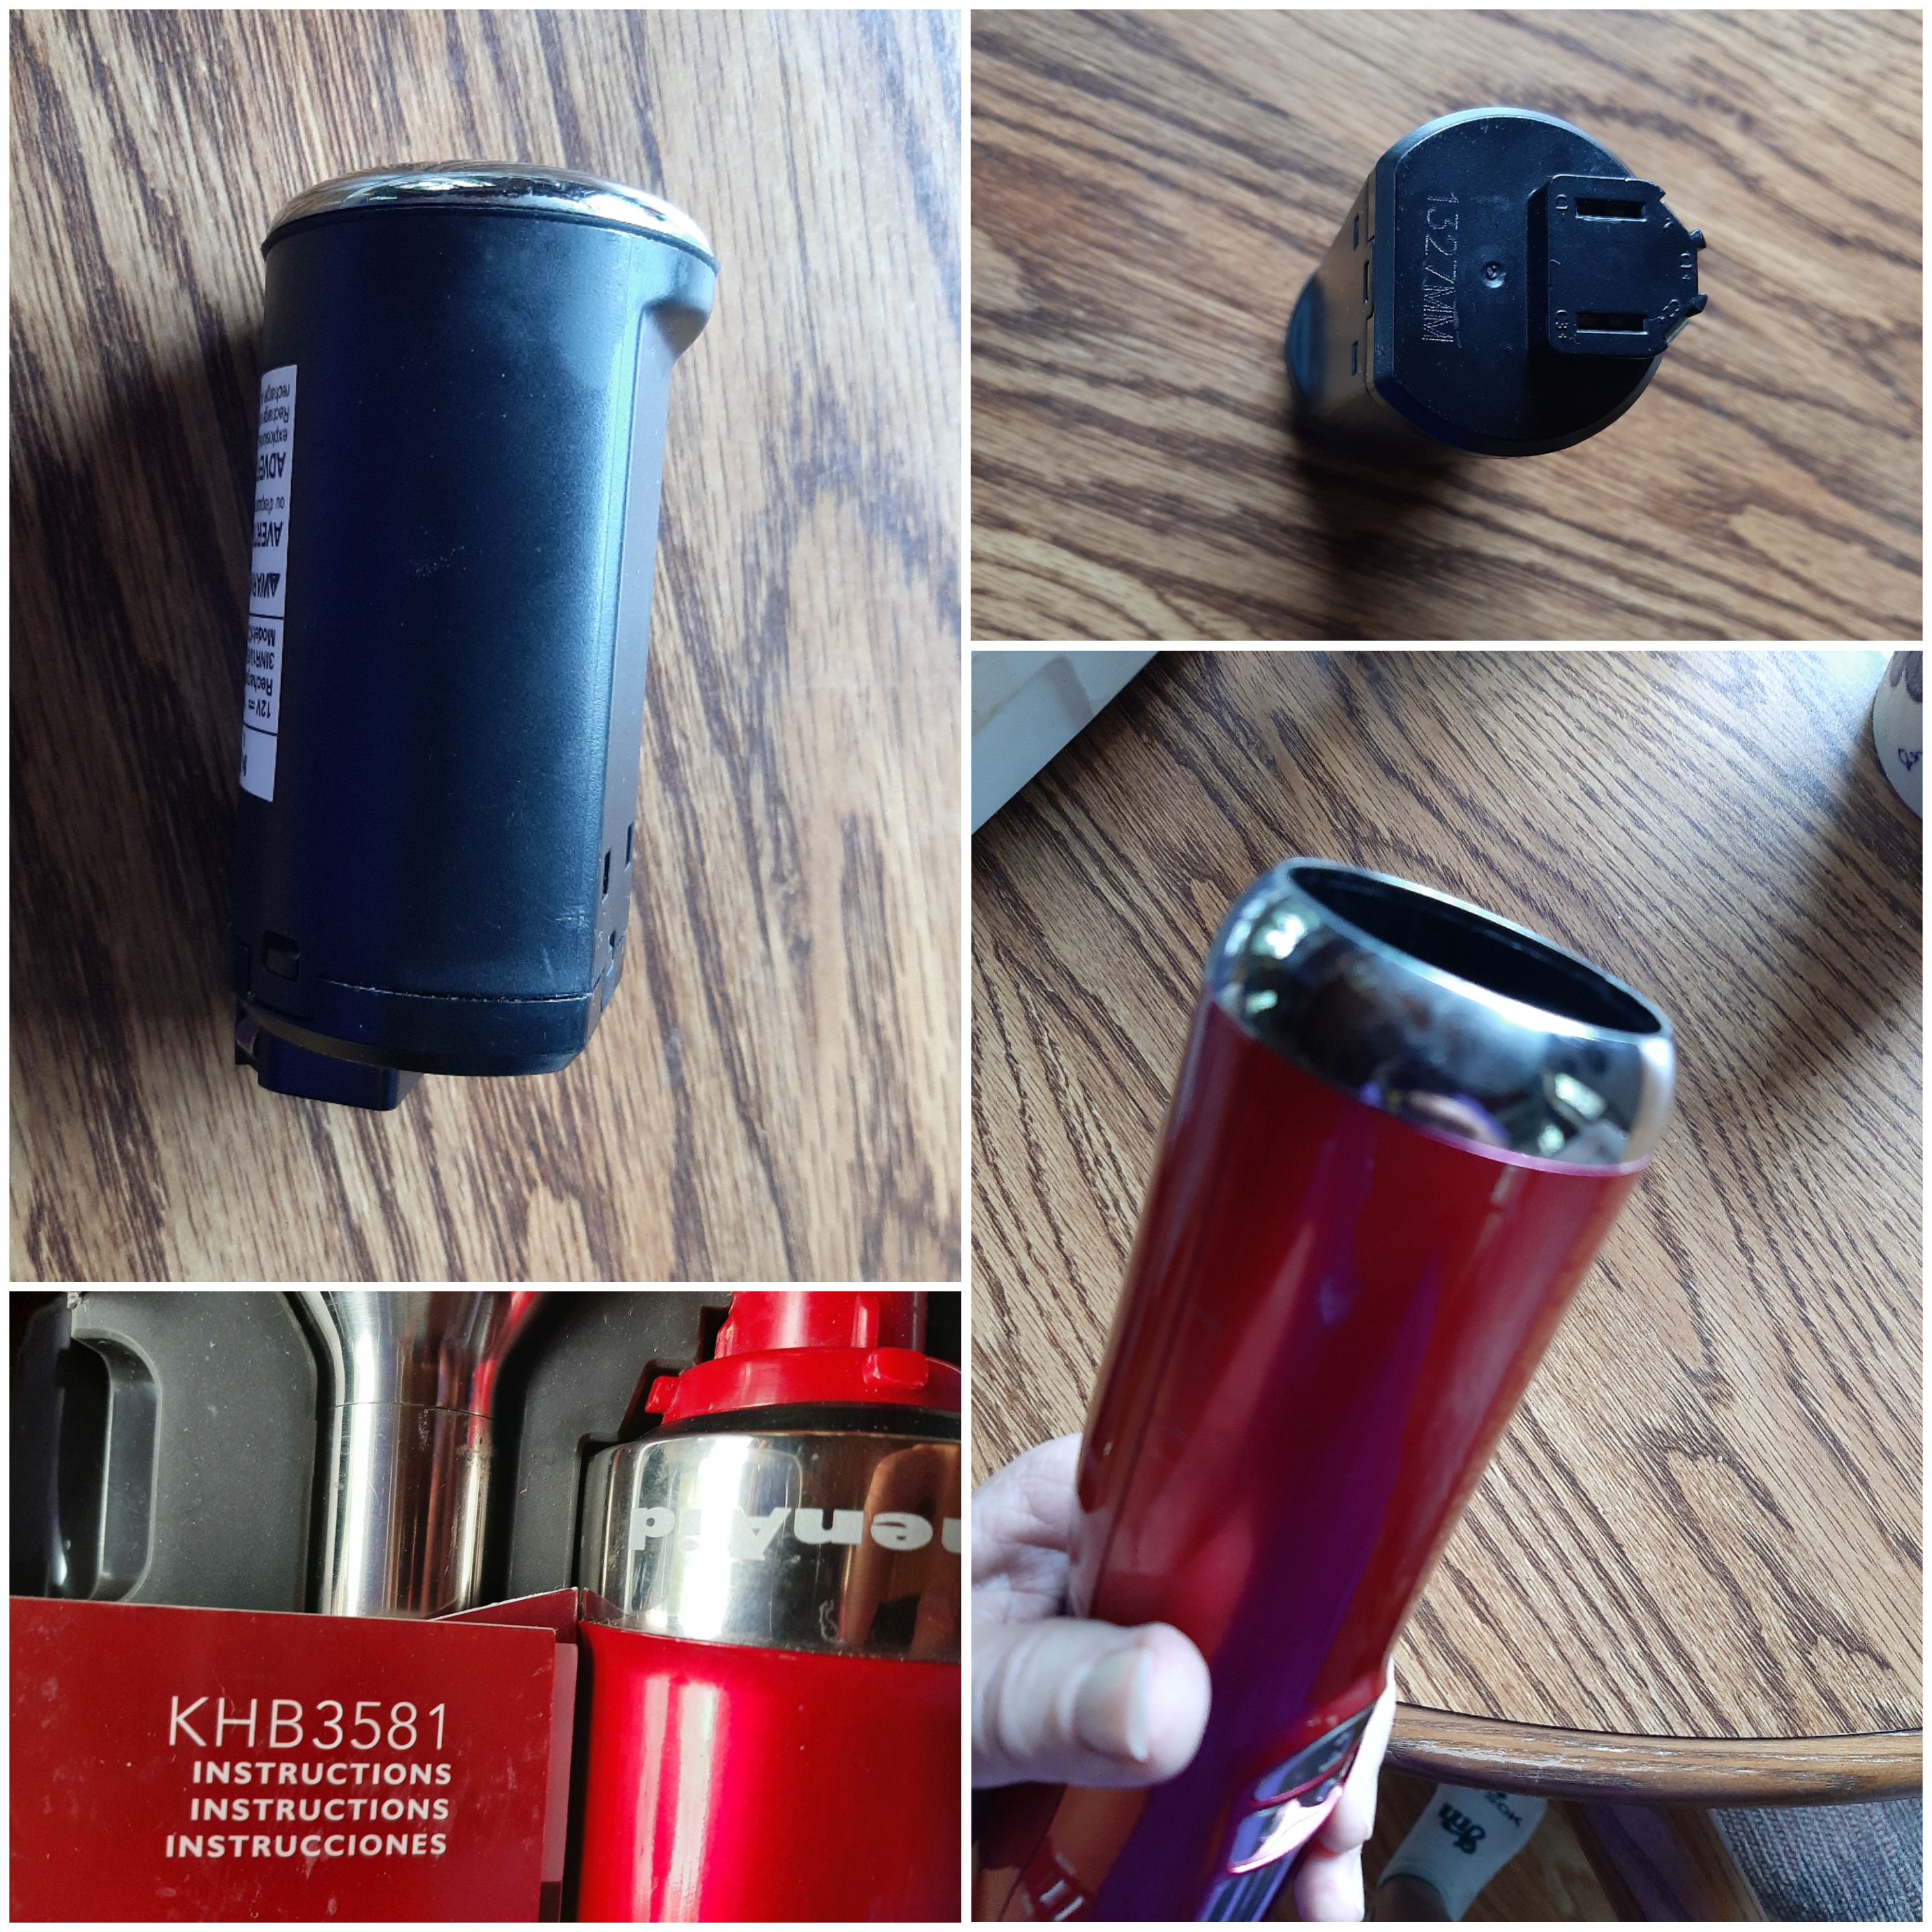 Battery failed for Kitchenaid KHB3581 immersion blender -- now